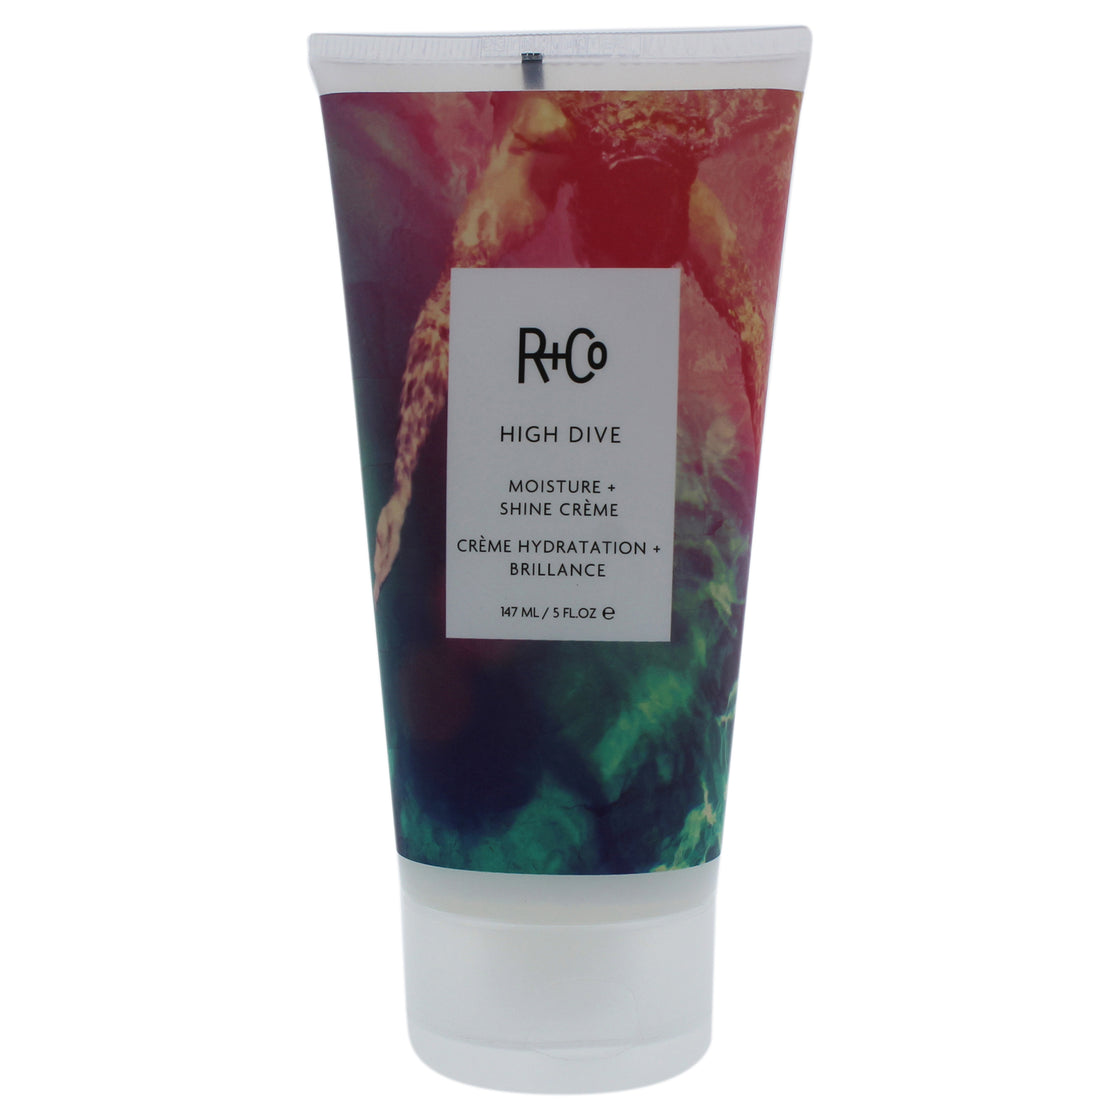 High Dive Moisture Plus Shine Creme by R+Co for Unisex - 5 oz Cream